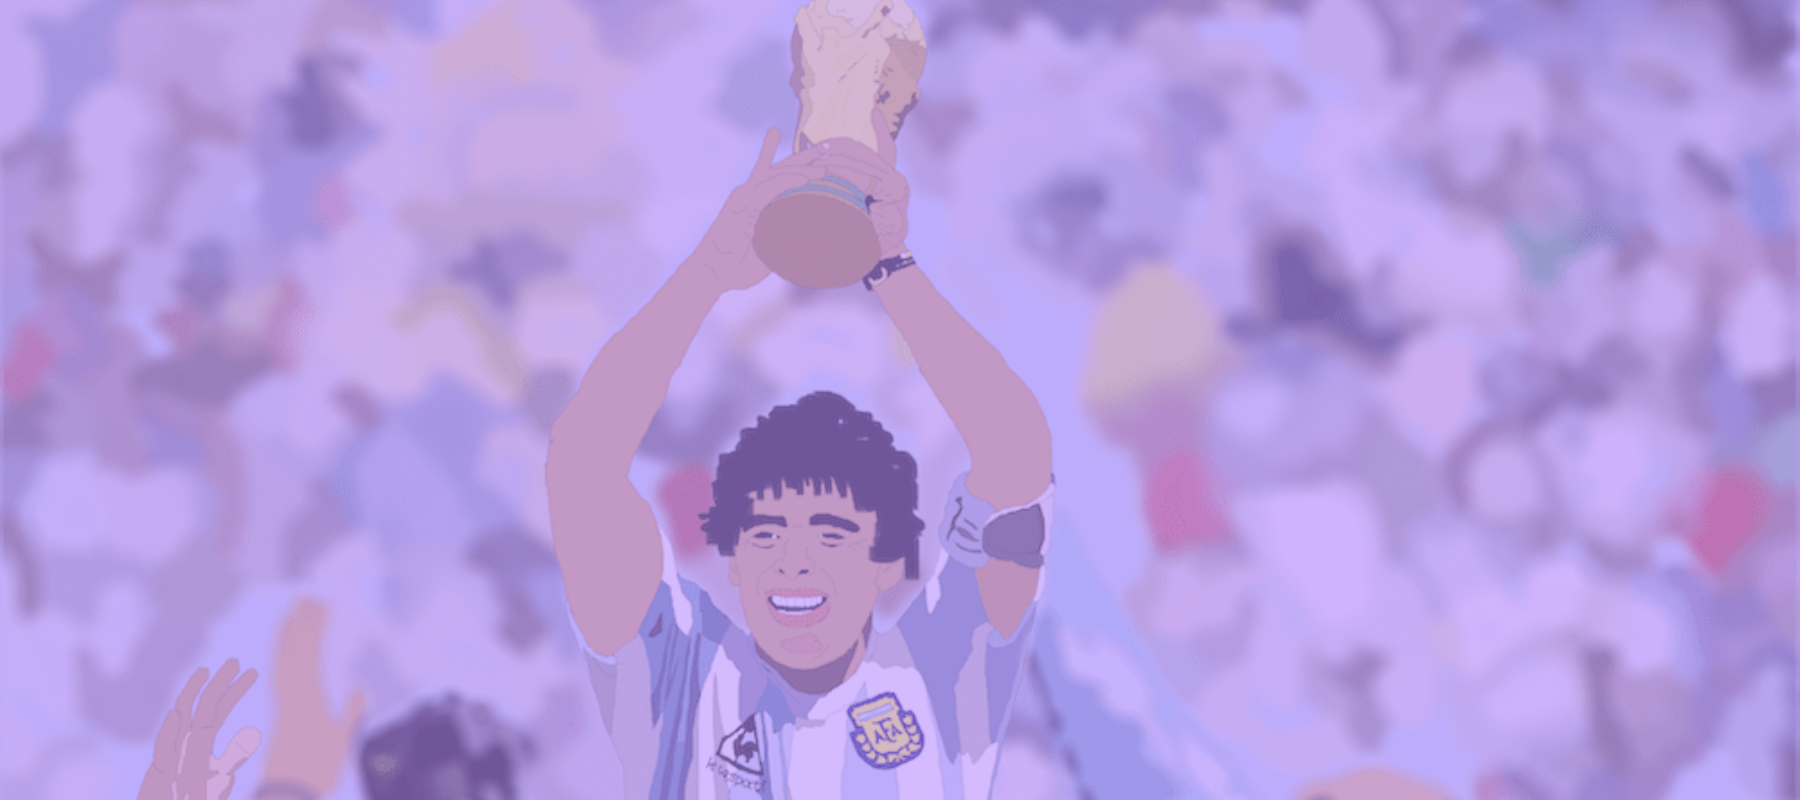 Diego Maradona: A career in shirts